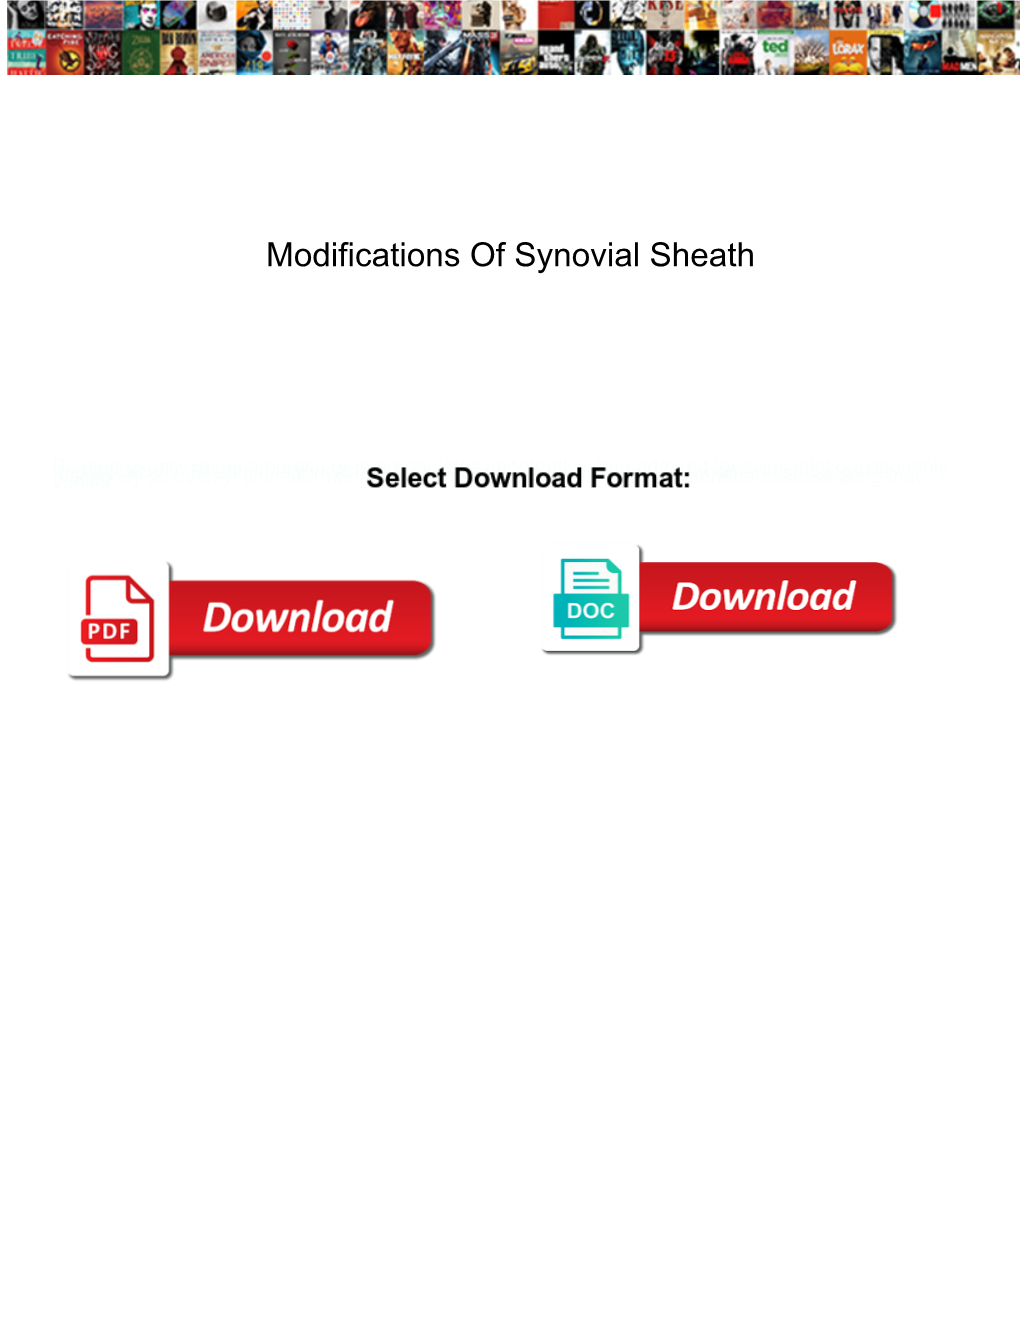 Modifications of Synovial Sheath